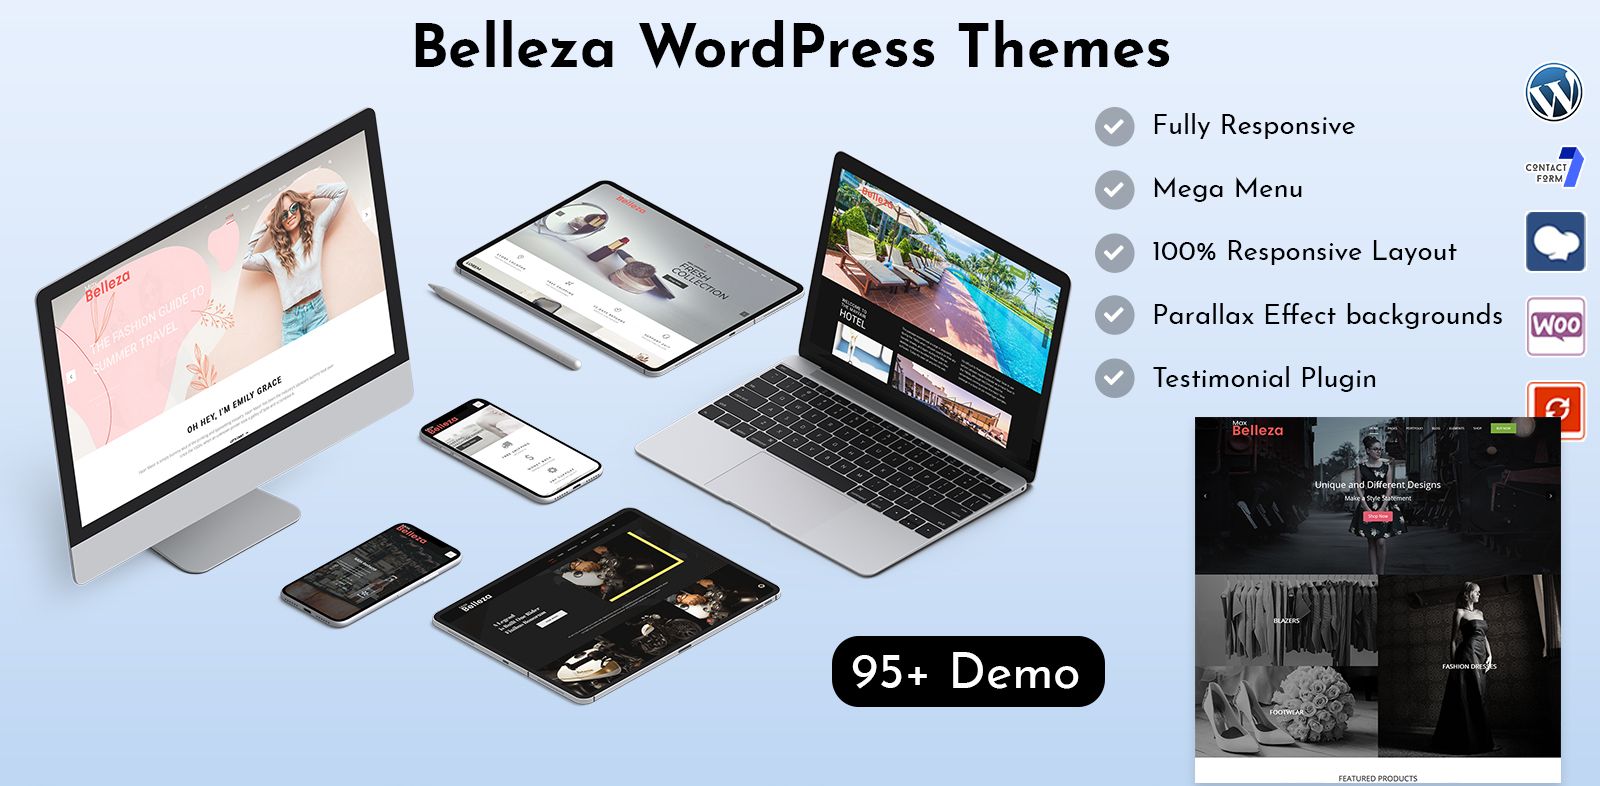 WooCommerce WordPress Themes